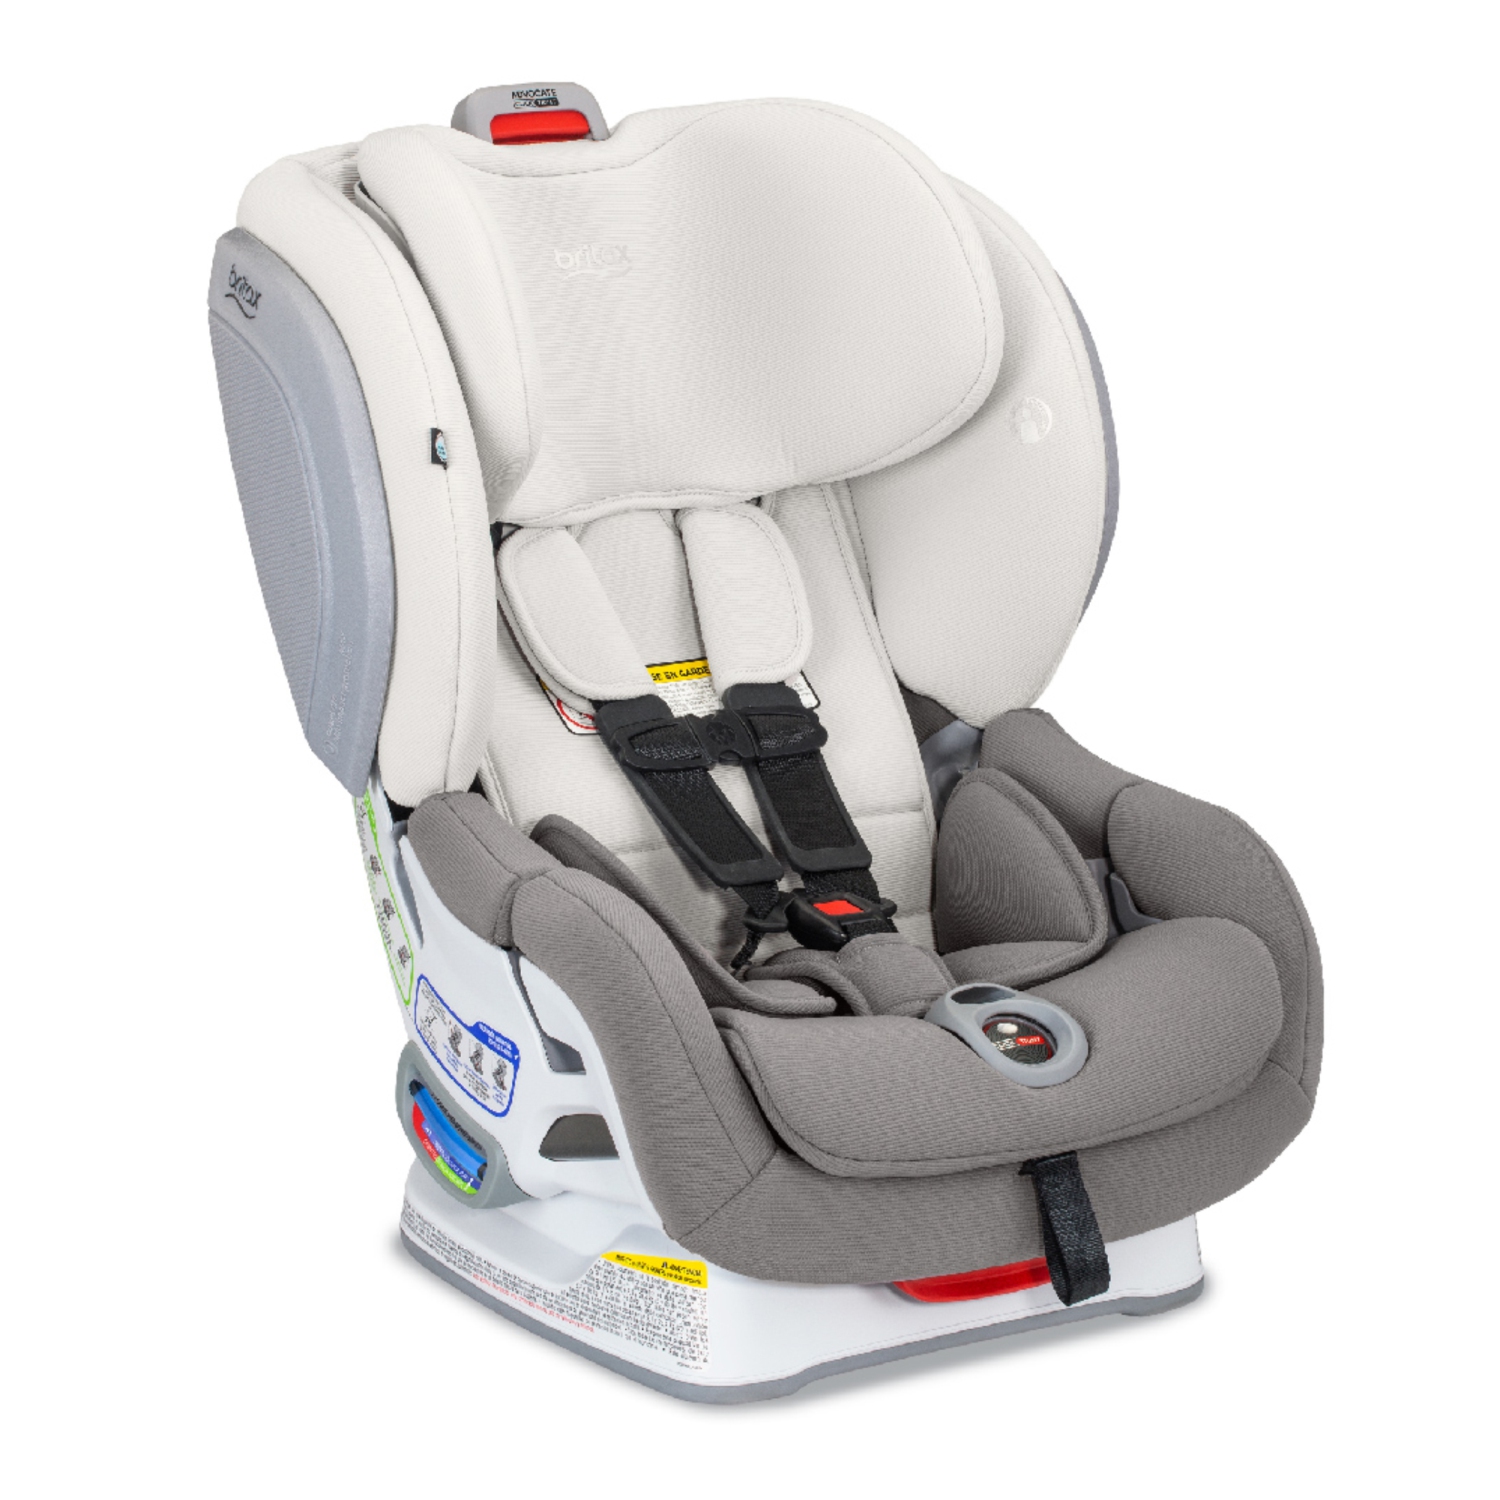 Britax Advocate ClickTight Convertible Car Seat - Gray Ombre (SafeWash)